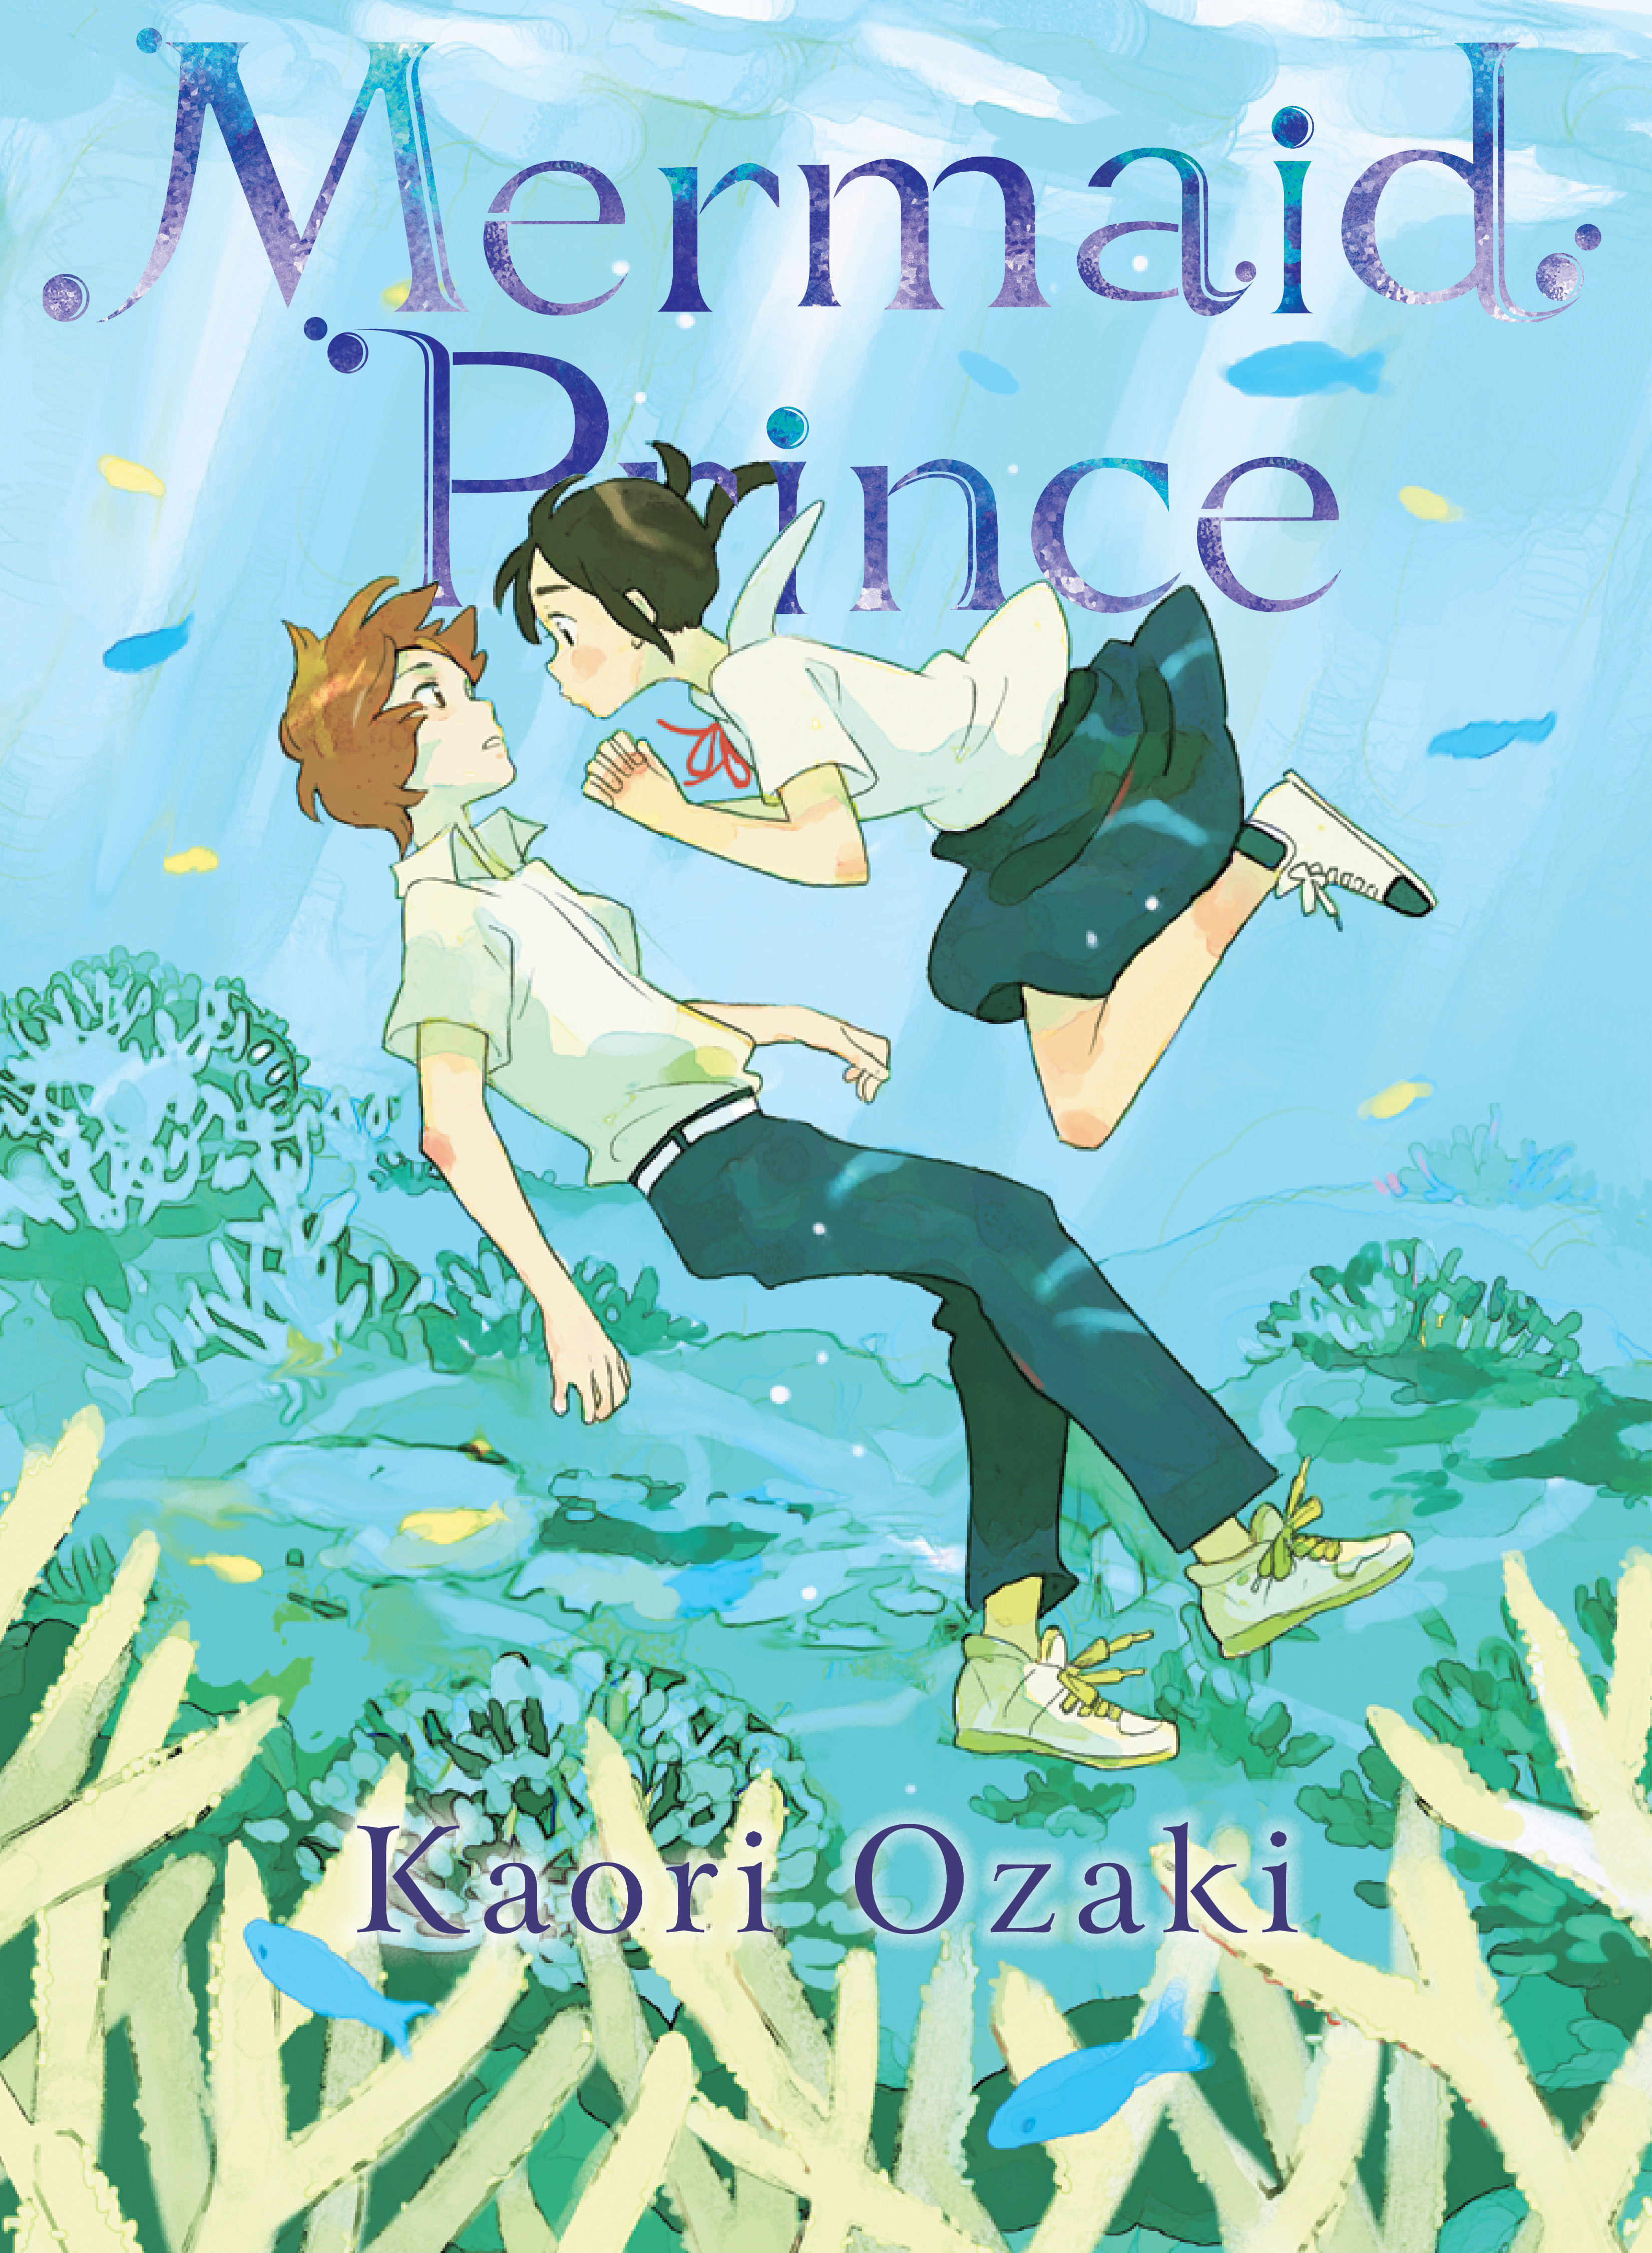 Mermaid Prince Manga